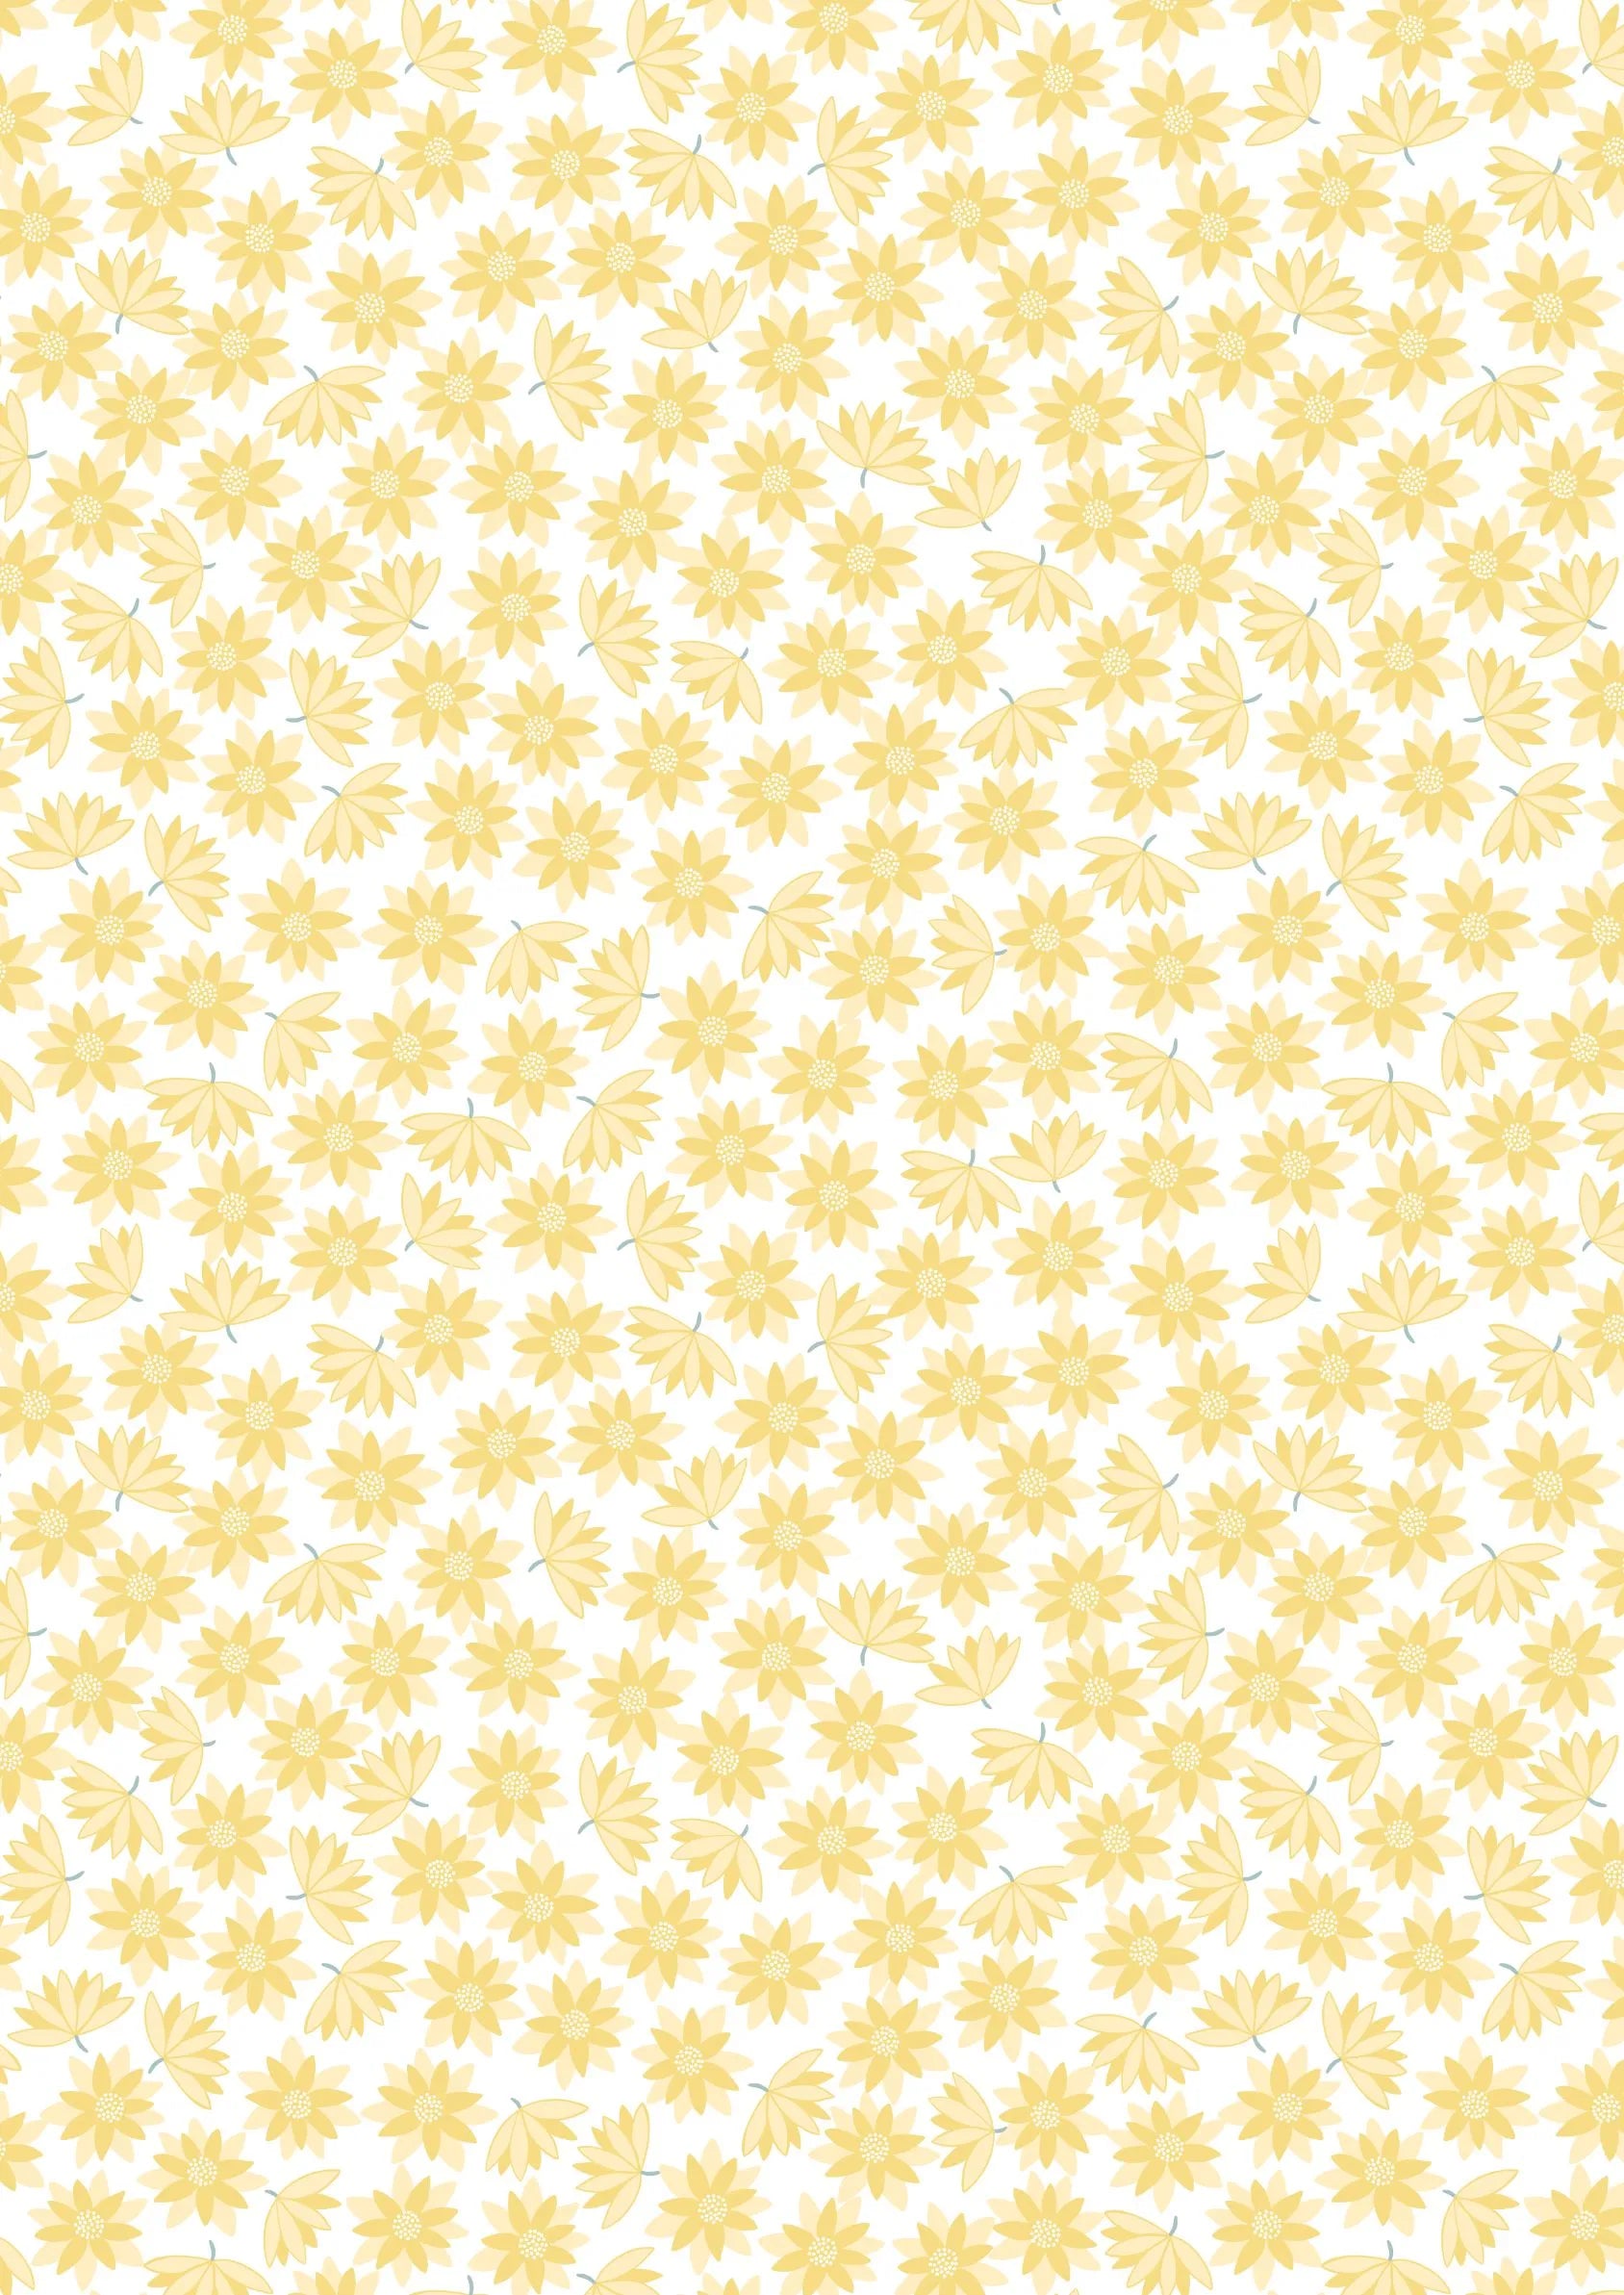 Yellow lillies on white cotton fabric